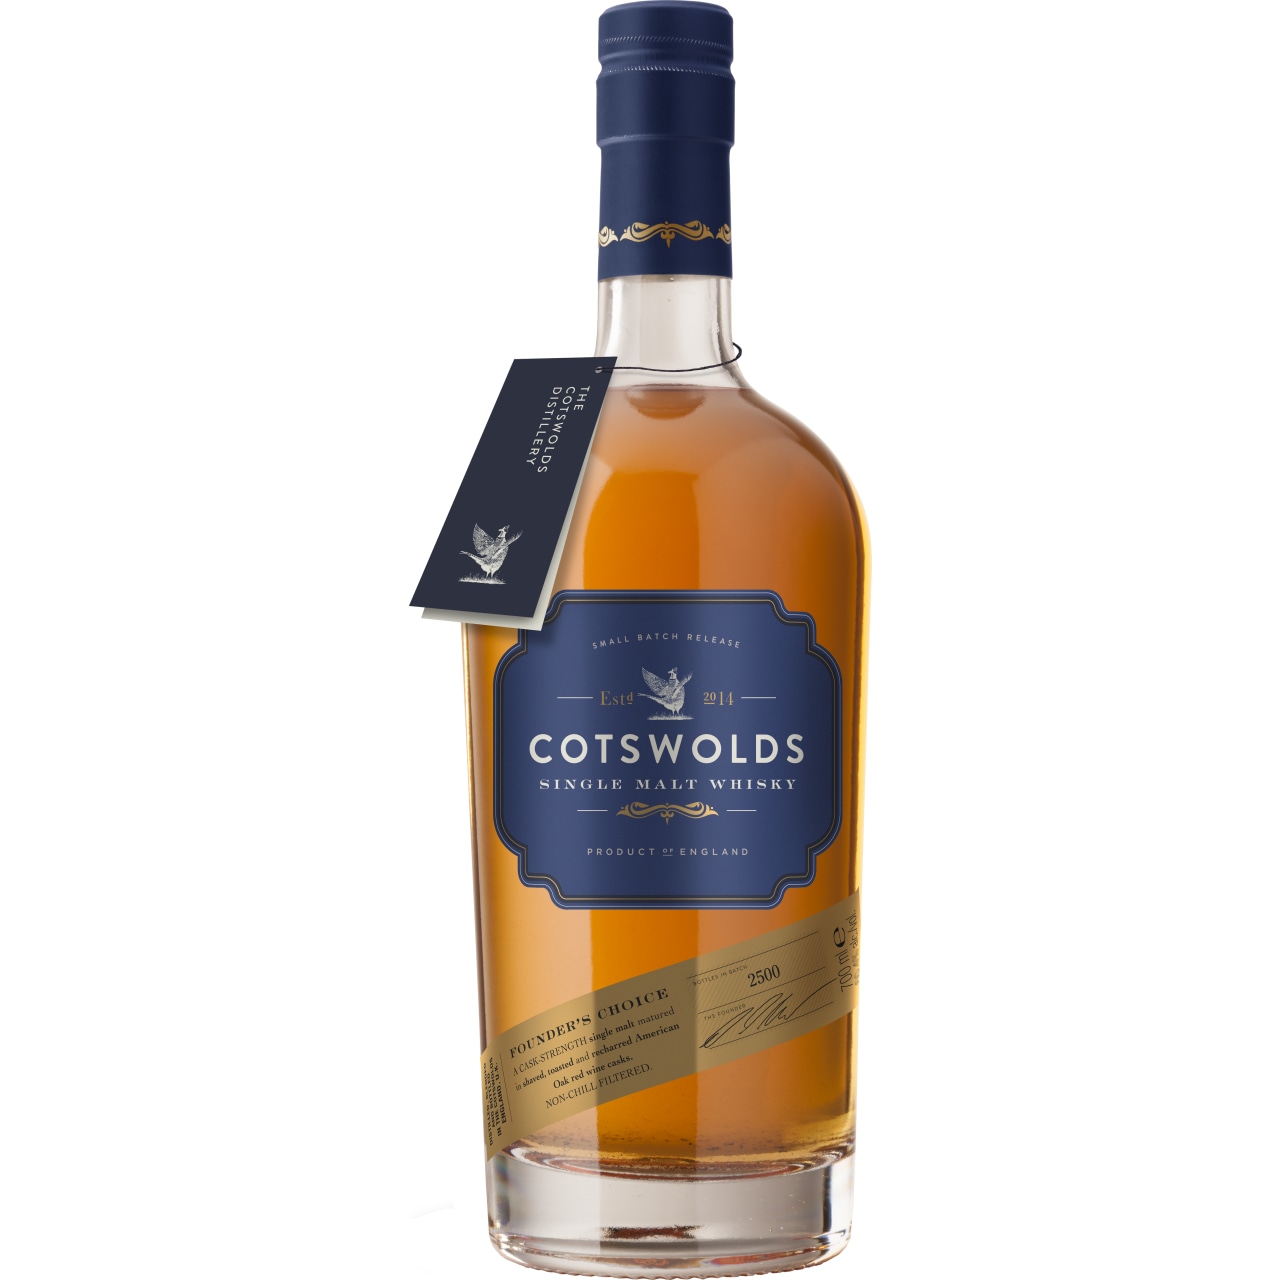 Cotswolds Founder's Choice Single Malt Whisky